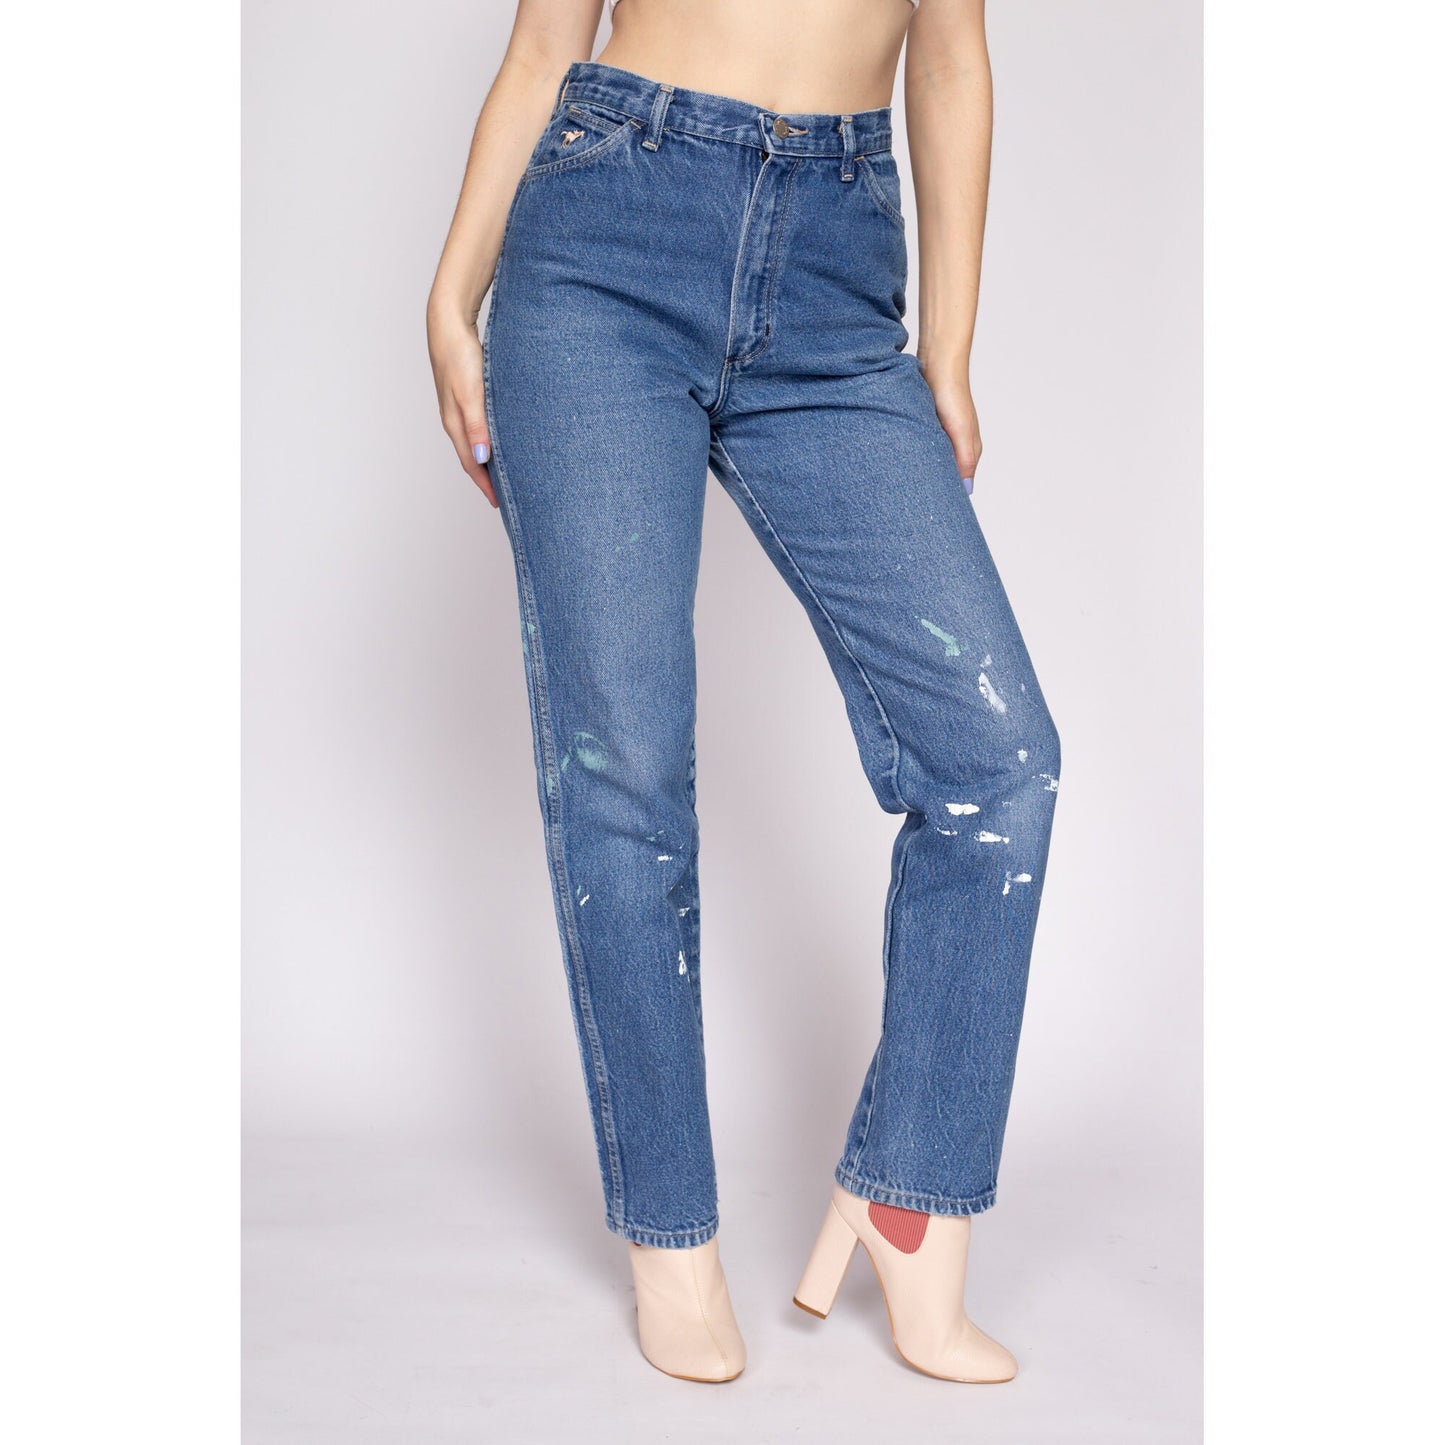 80s Wrangler High Waisted Paint Splattered Jeans - Medium, 28" | Vintage Distressed Denim Tapered Leg Curvy Fit Mom Jeans